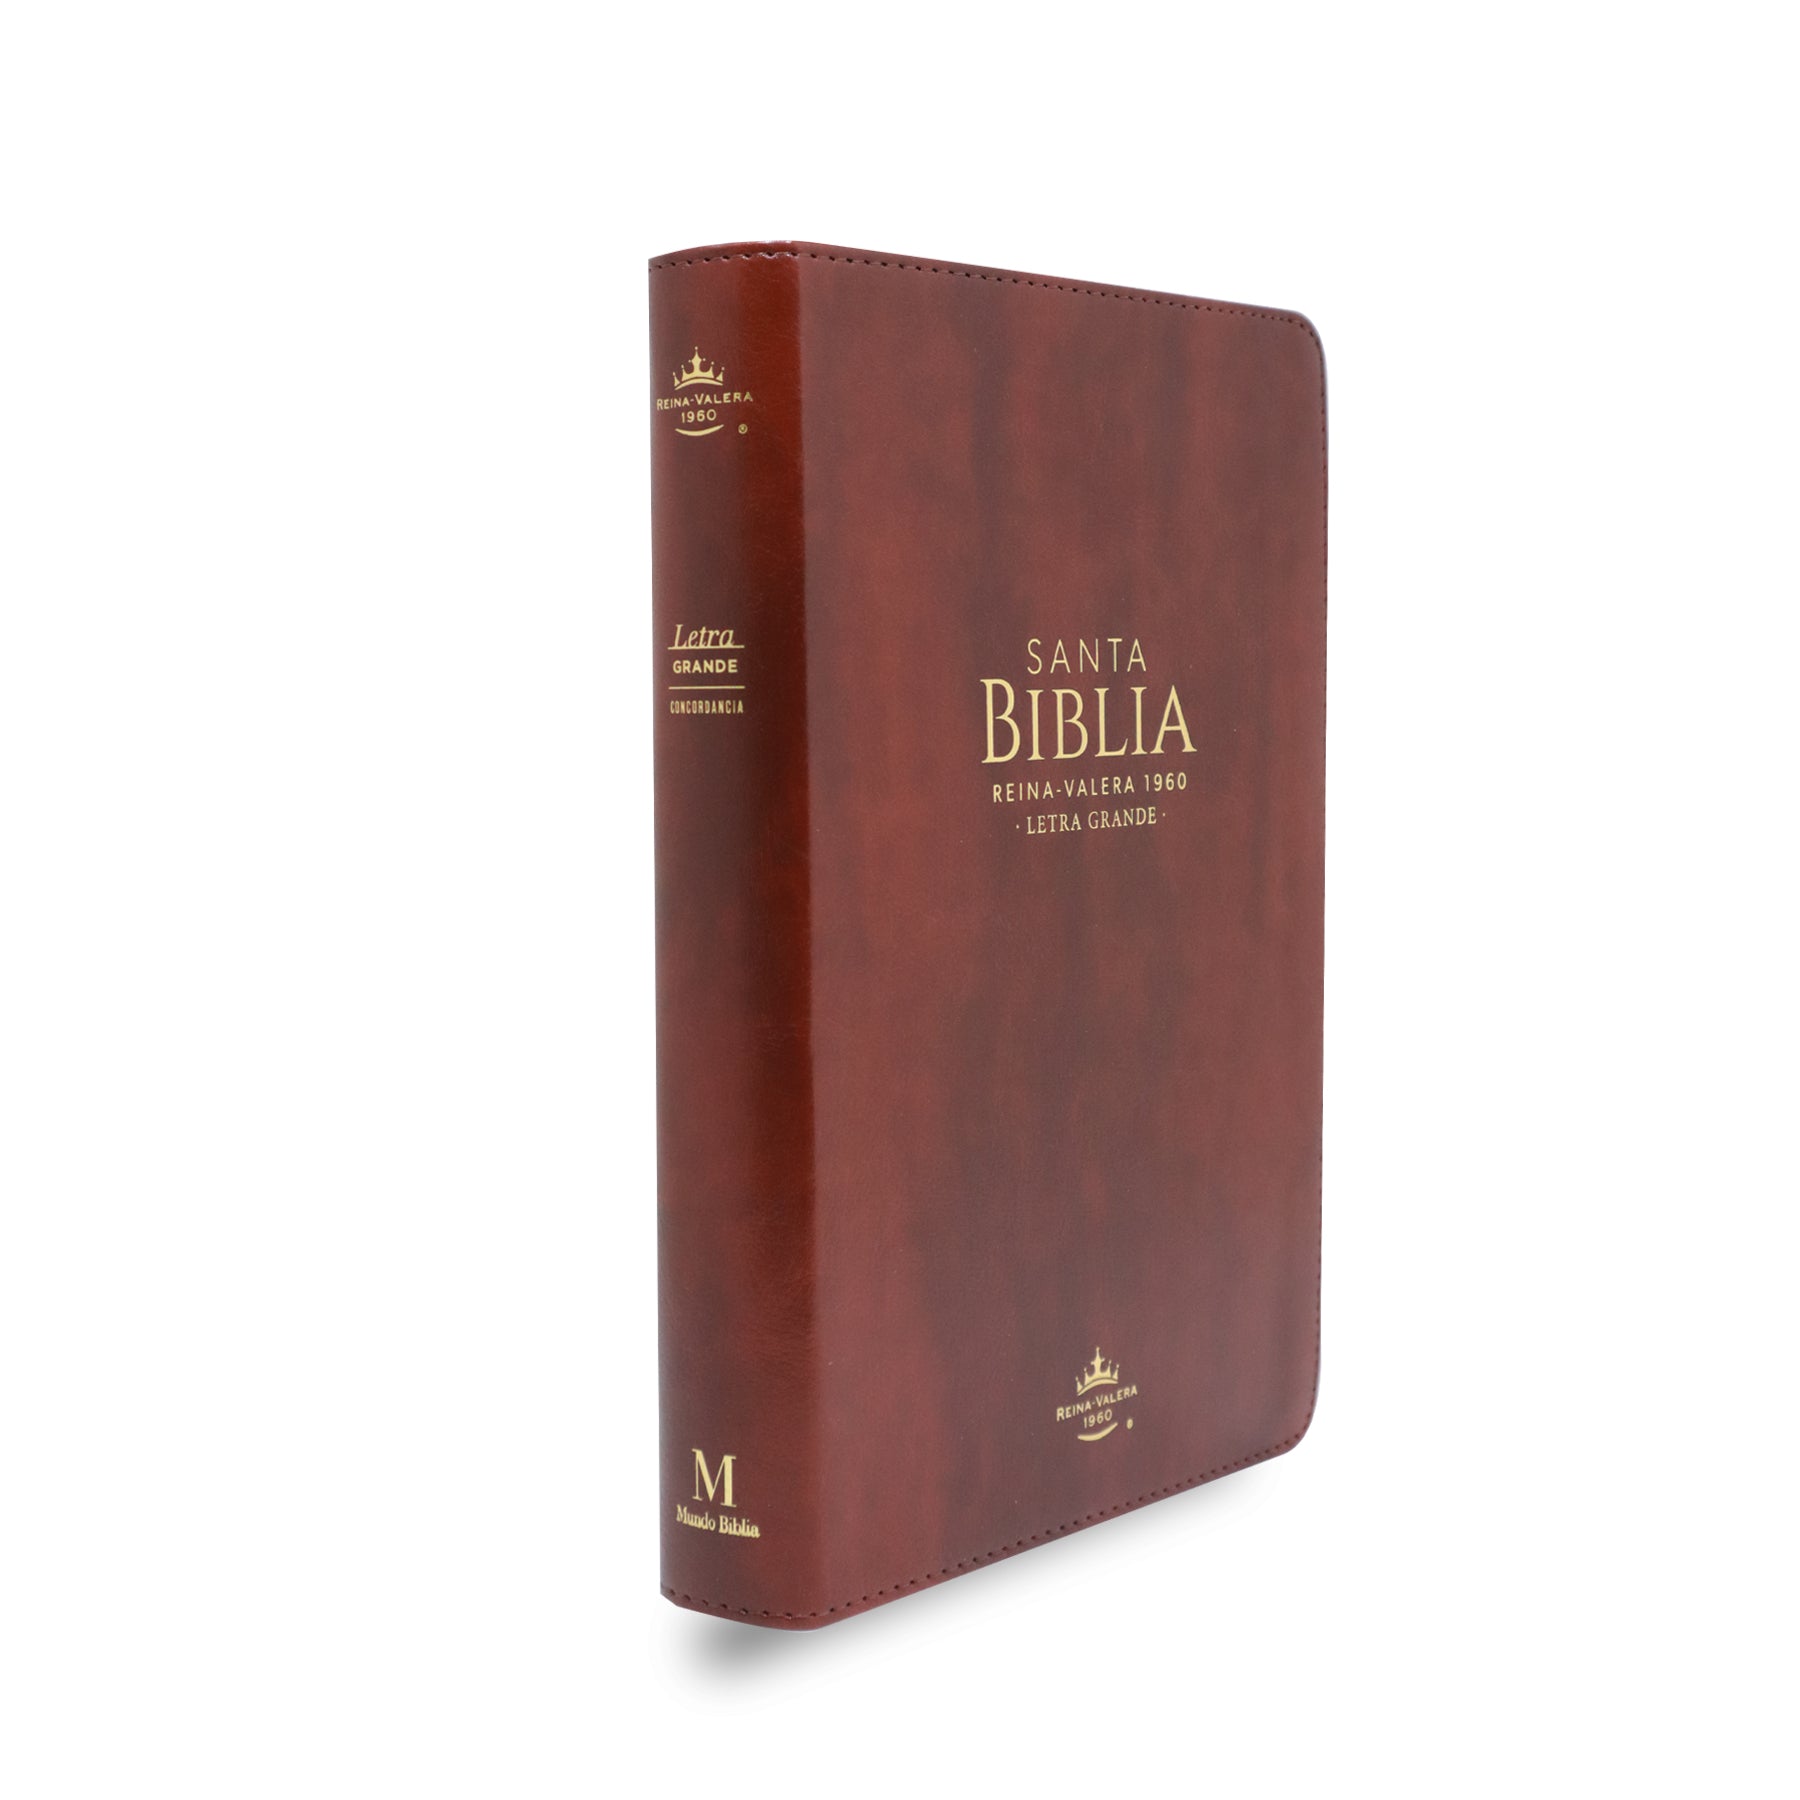 BIBLIA REINA VALERA 1960 LETRA GRANDE MANUAL CLÁSICA